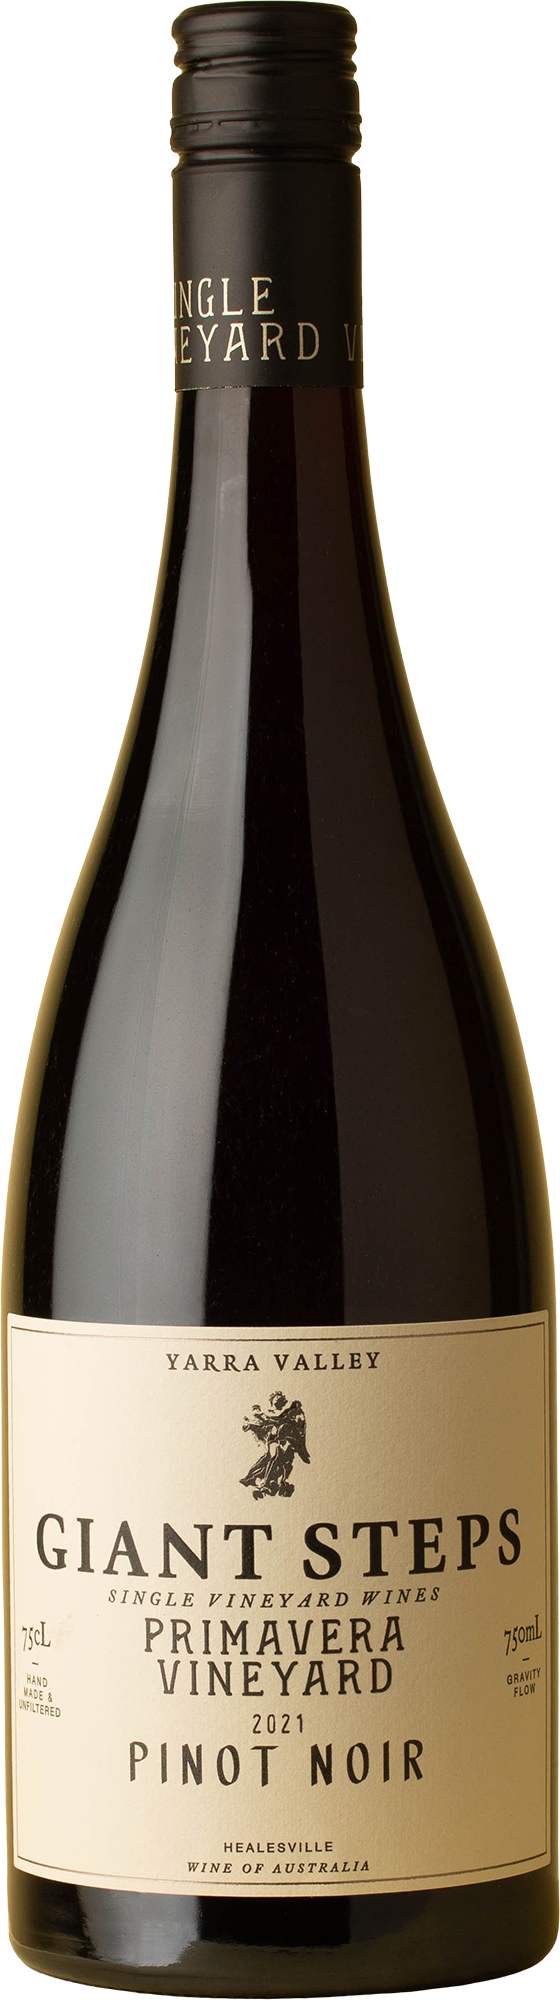 Giant Steps - Primavera Vineyard Pinot Noir 2021 Red Wine